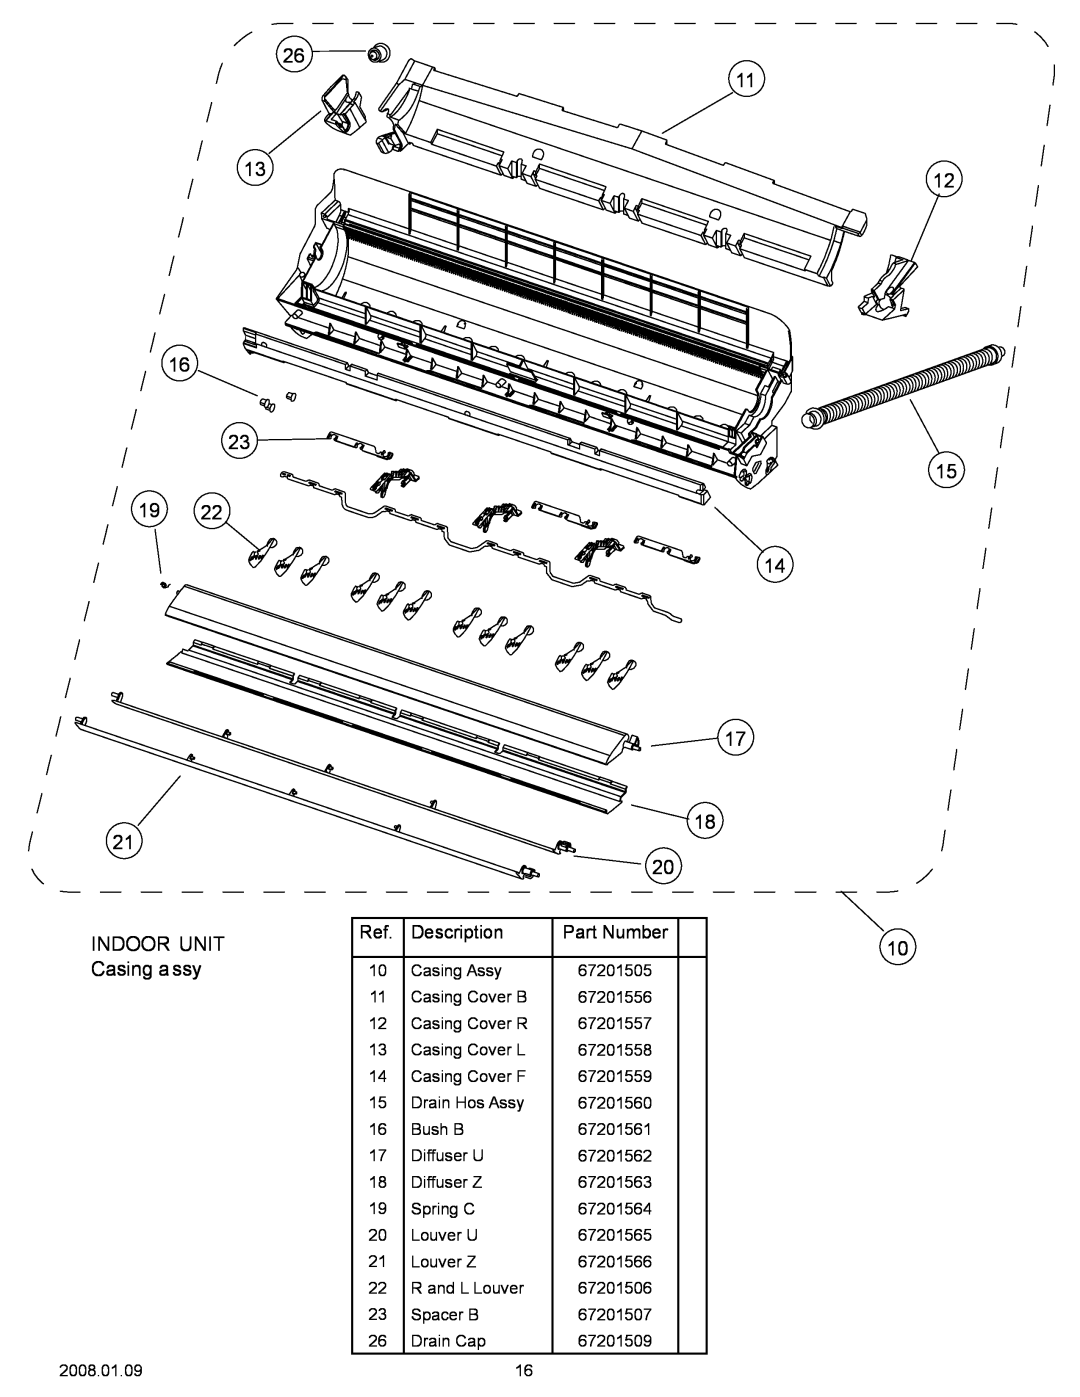 Friedrich M30CF specifications INDOOR UNIT Casing assy, 26 13, Description, Part Number 